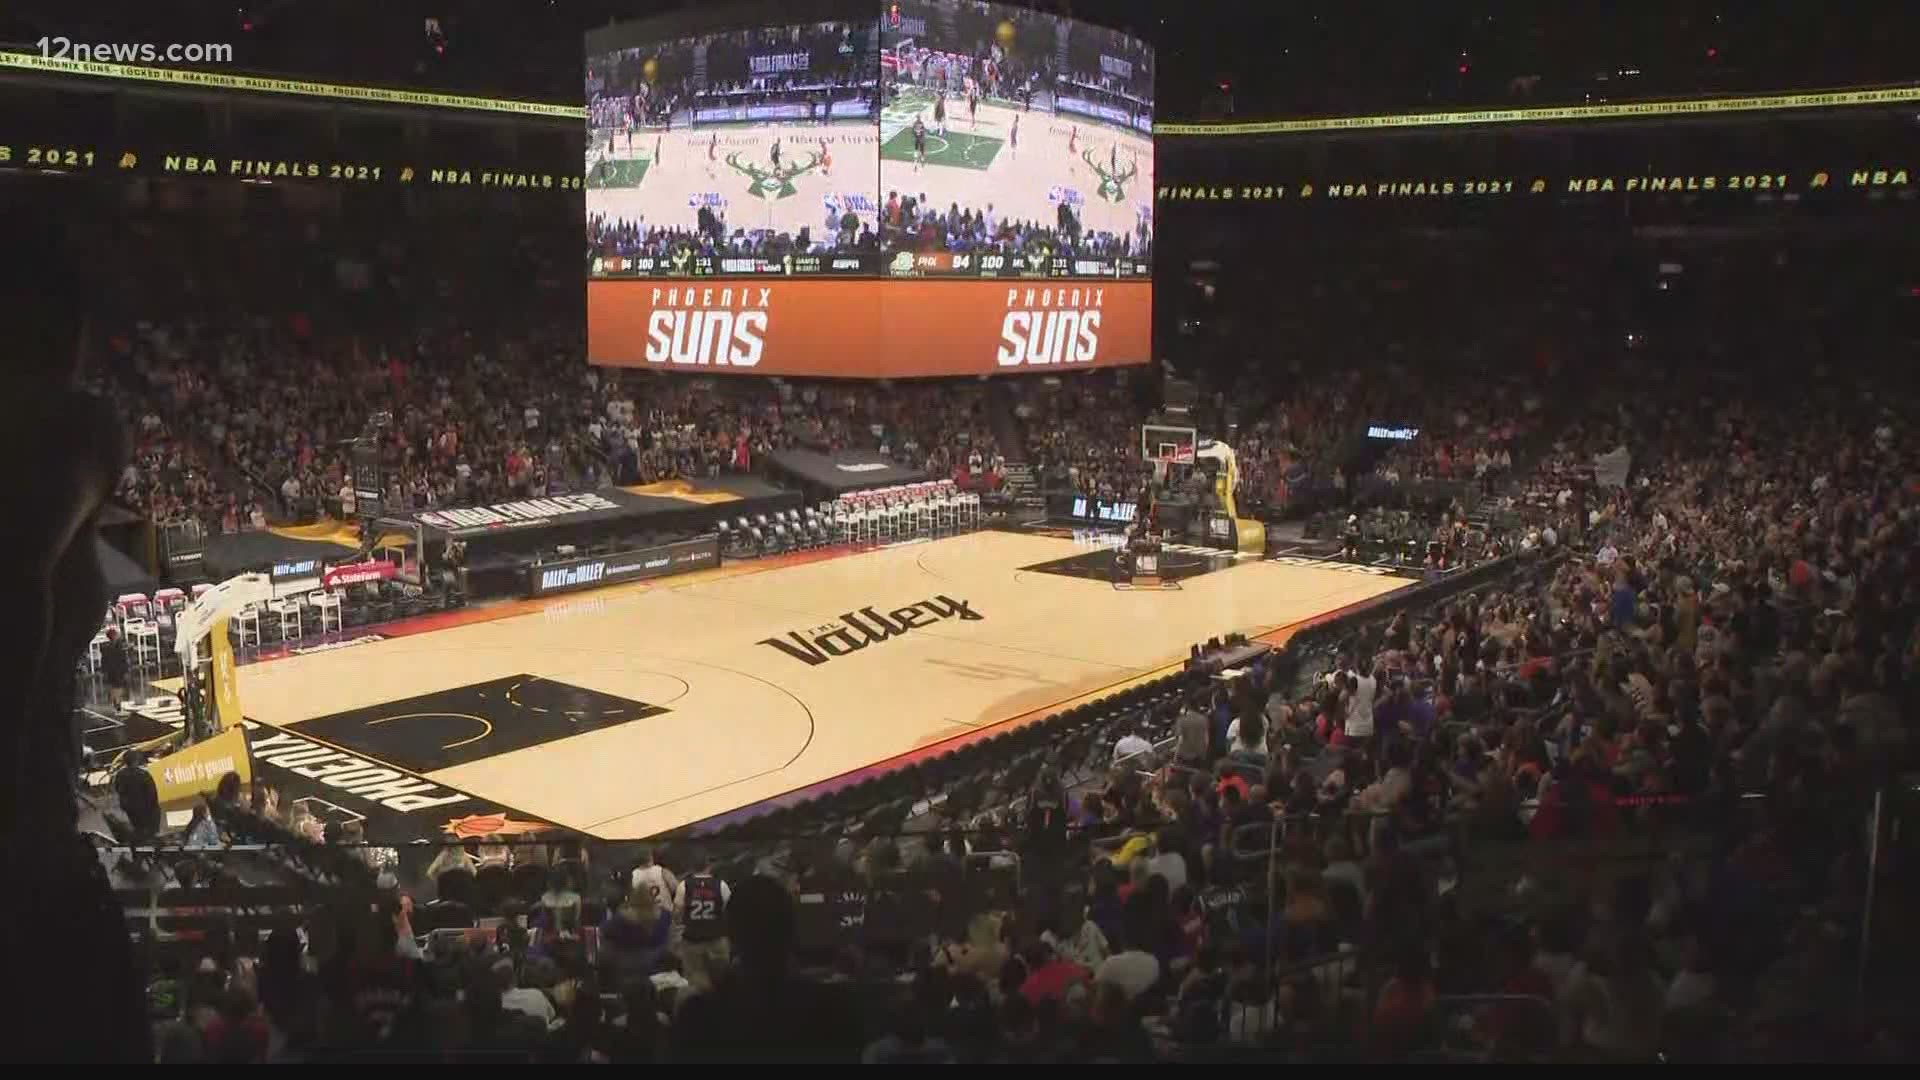 Bucks beat Suns to win their 1st NBA championship in 50 years